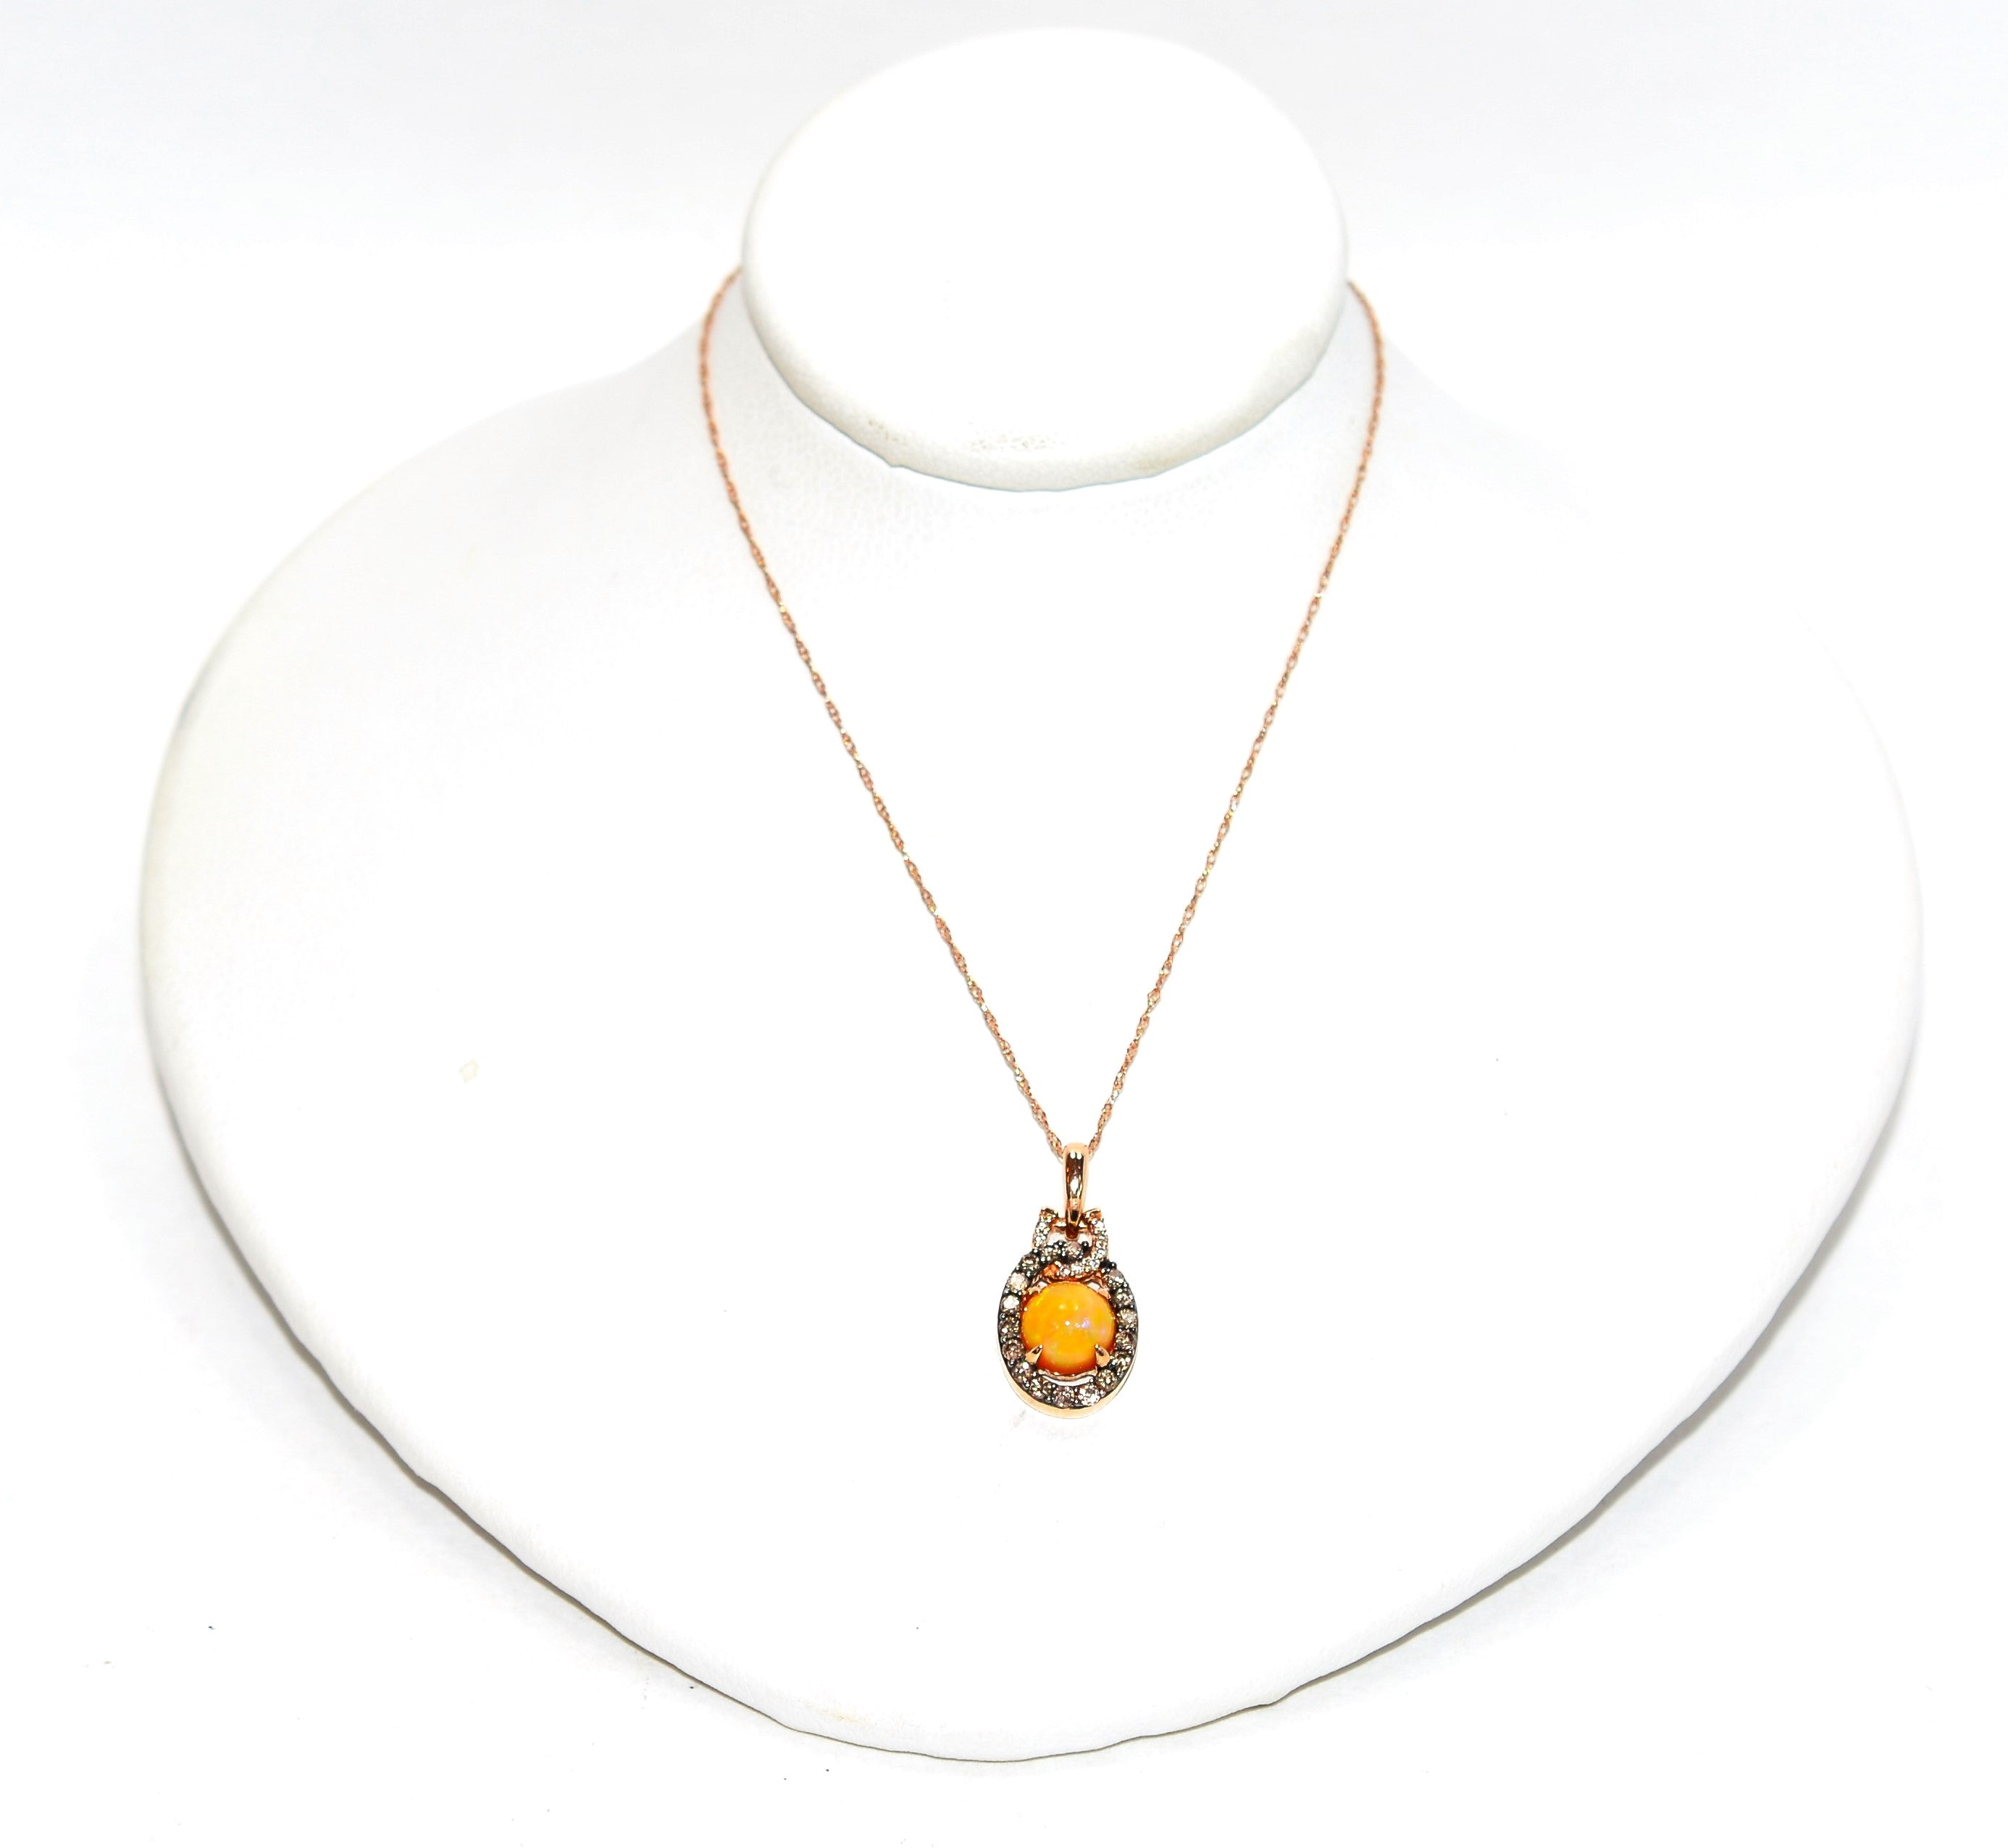 LeVian Natural Neopolitan Opal & Diamond Necklace 14K Rose Gold .83tcw Pendant Necklace Strawberry Gold Designer Statement Jewelry Estate